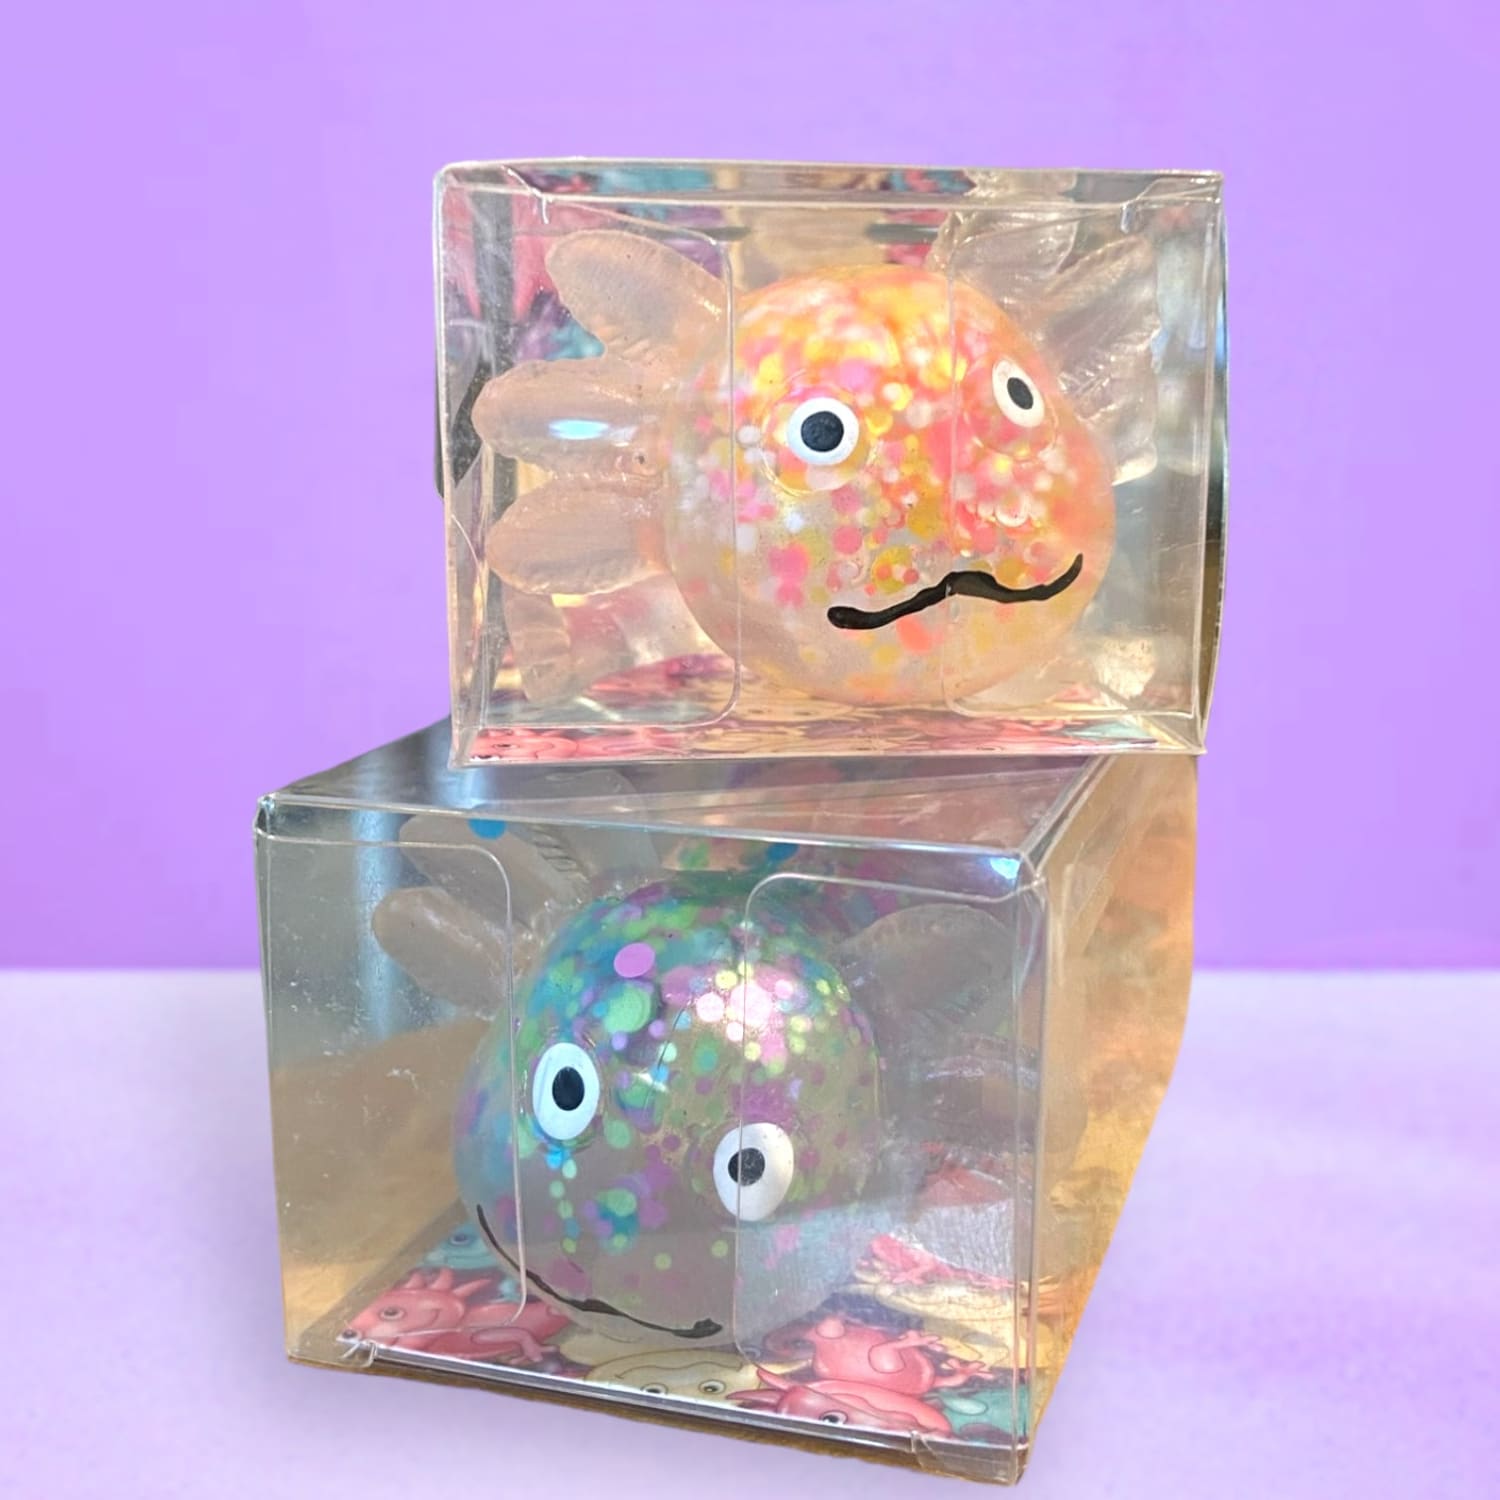 Gummiez Axolotl Squish Toy - Fidget Kids Sensory